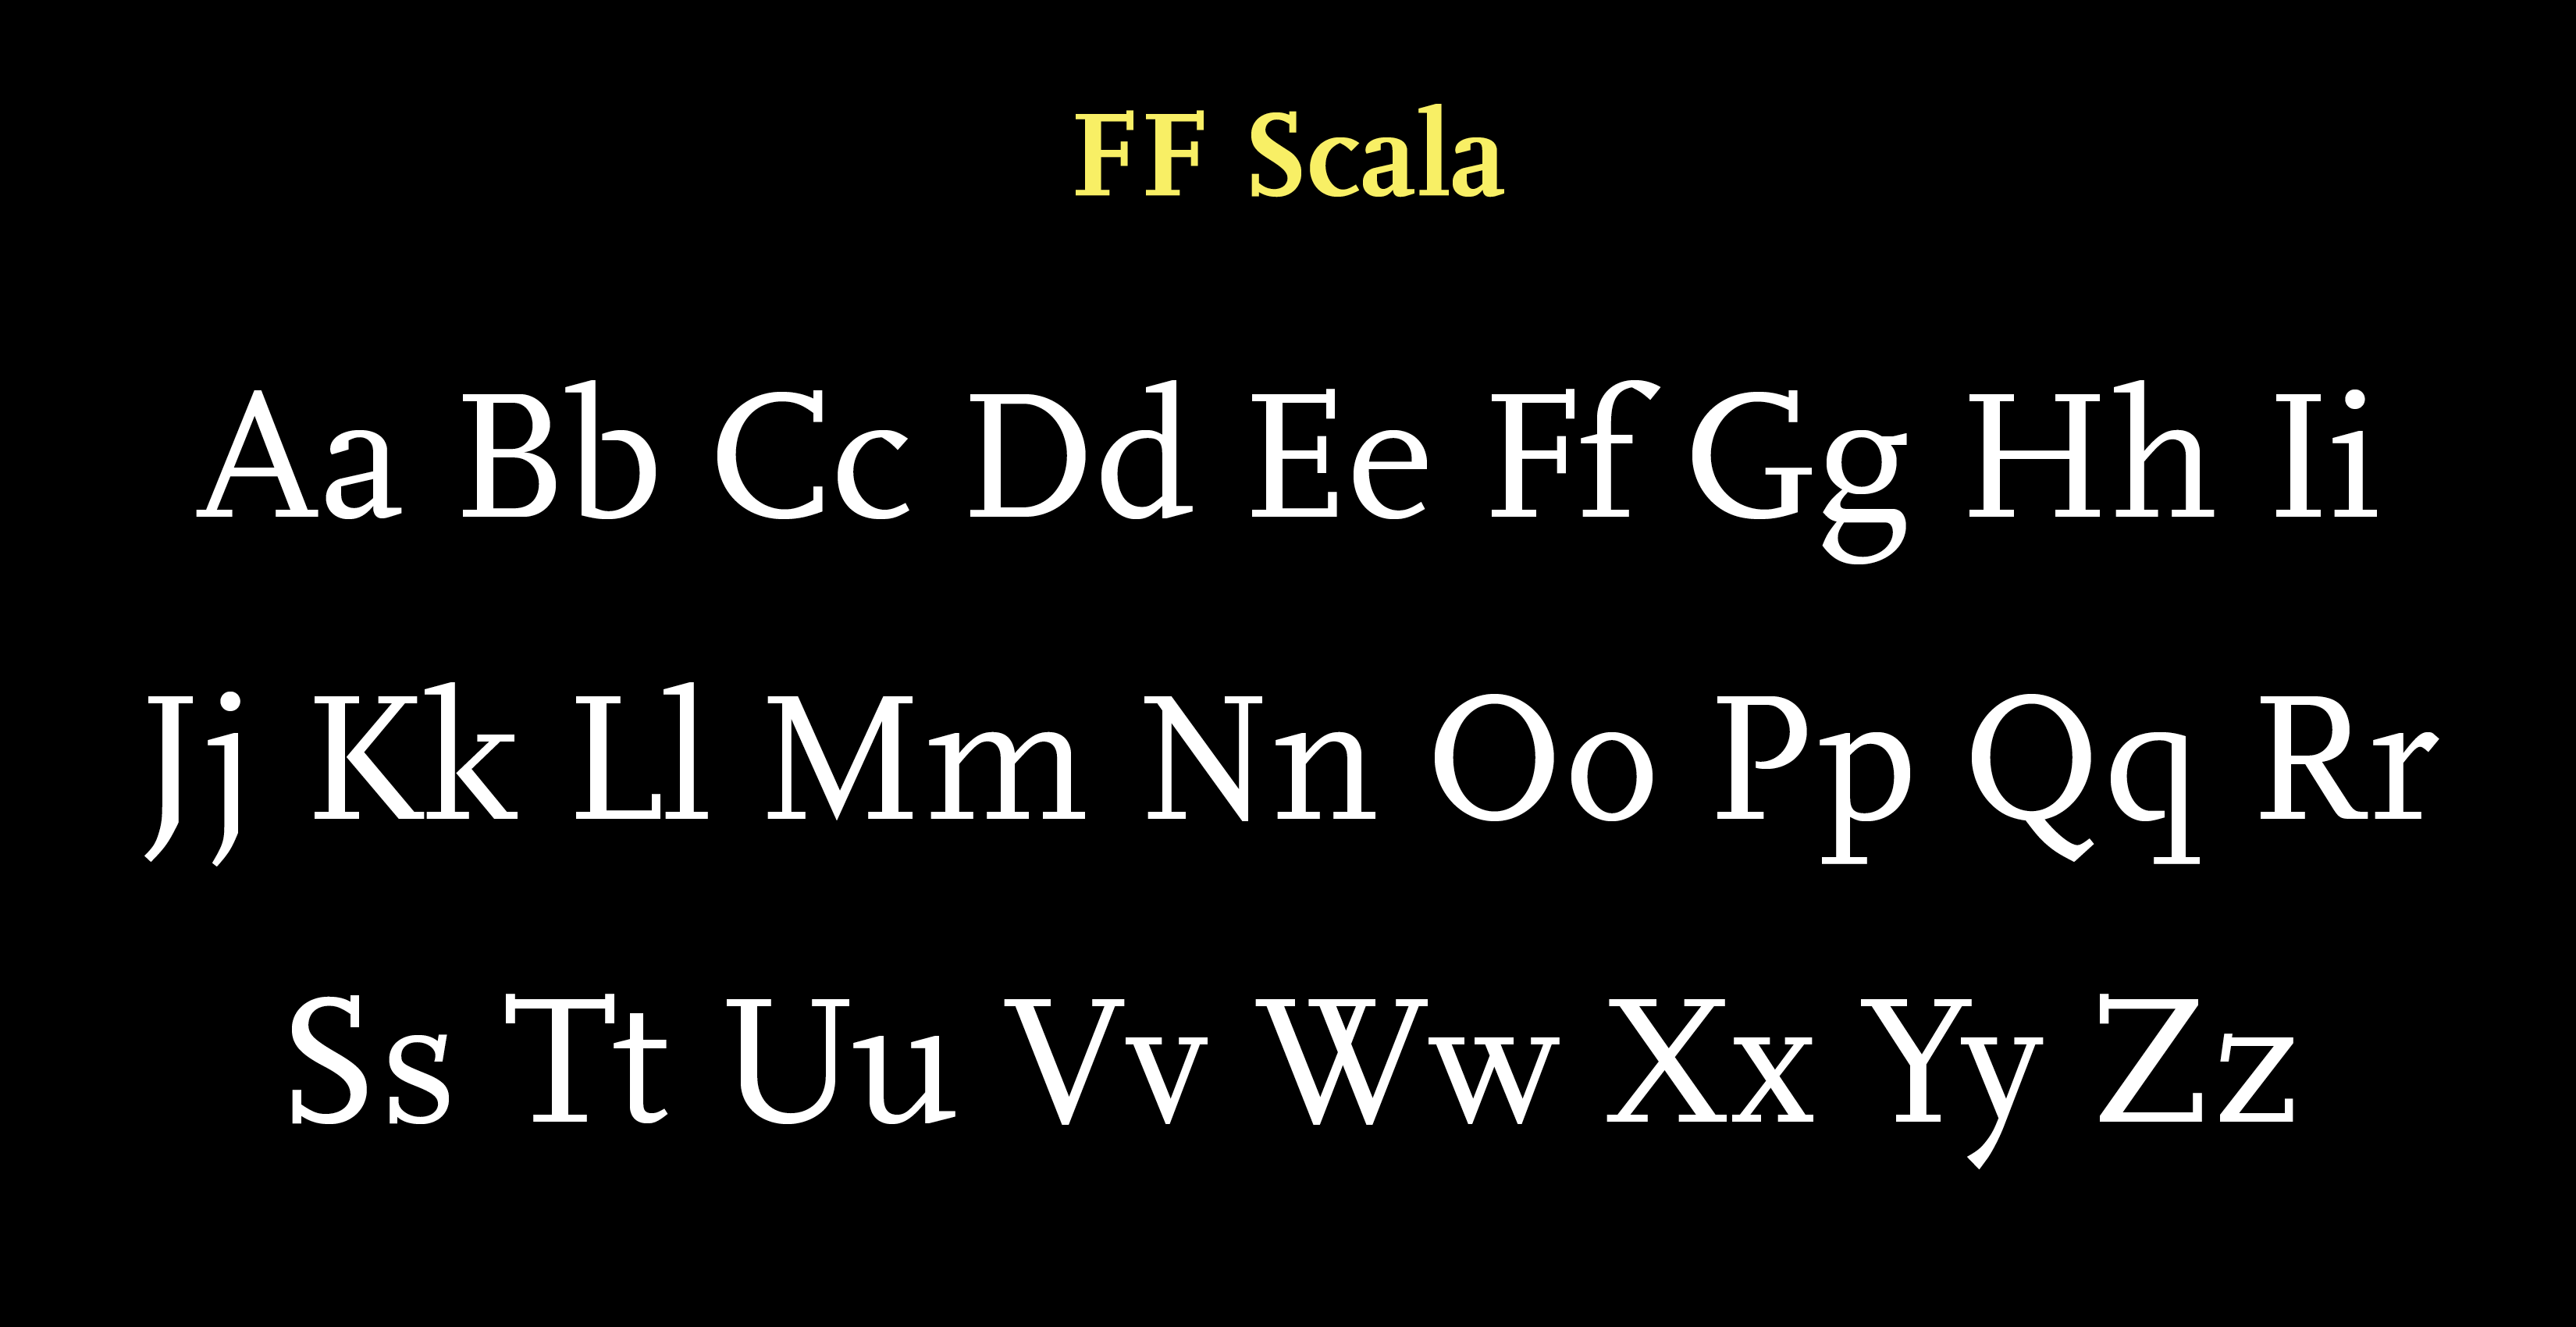 Communications Studio I: SCALA Typeface Study | by Mimi Jiao | Medium